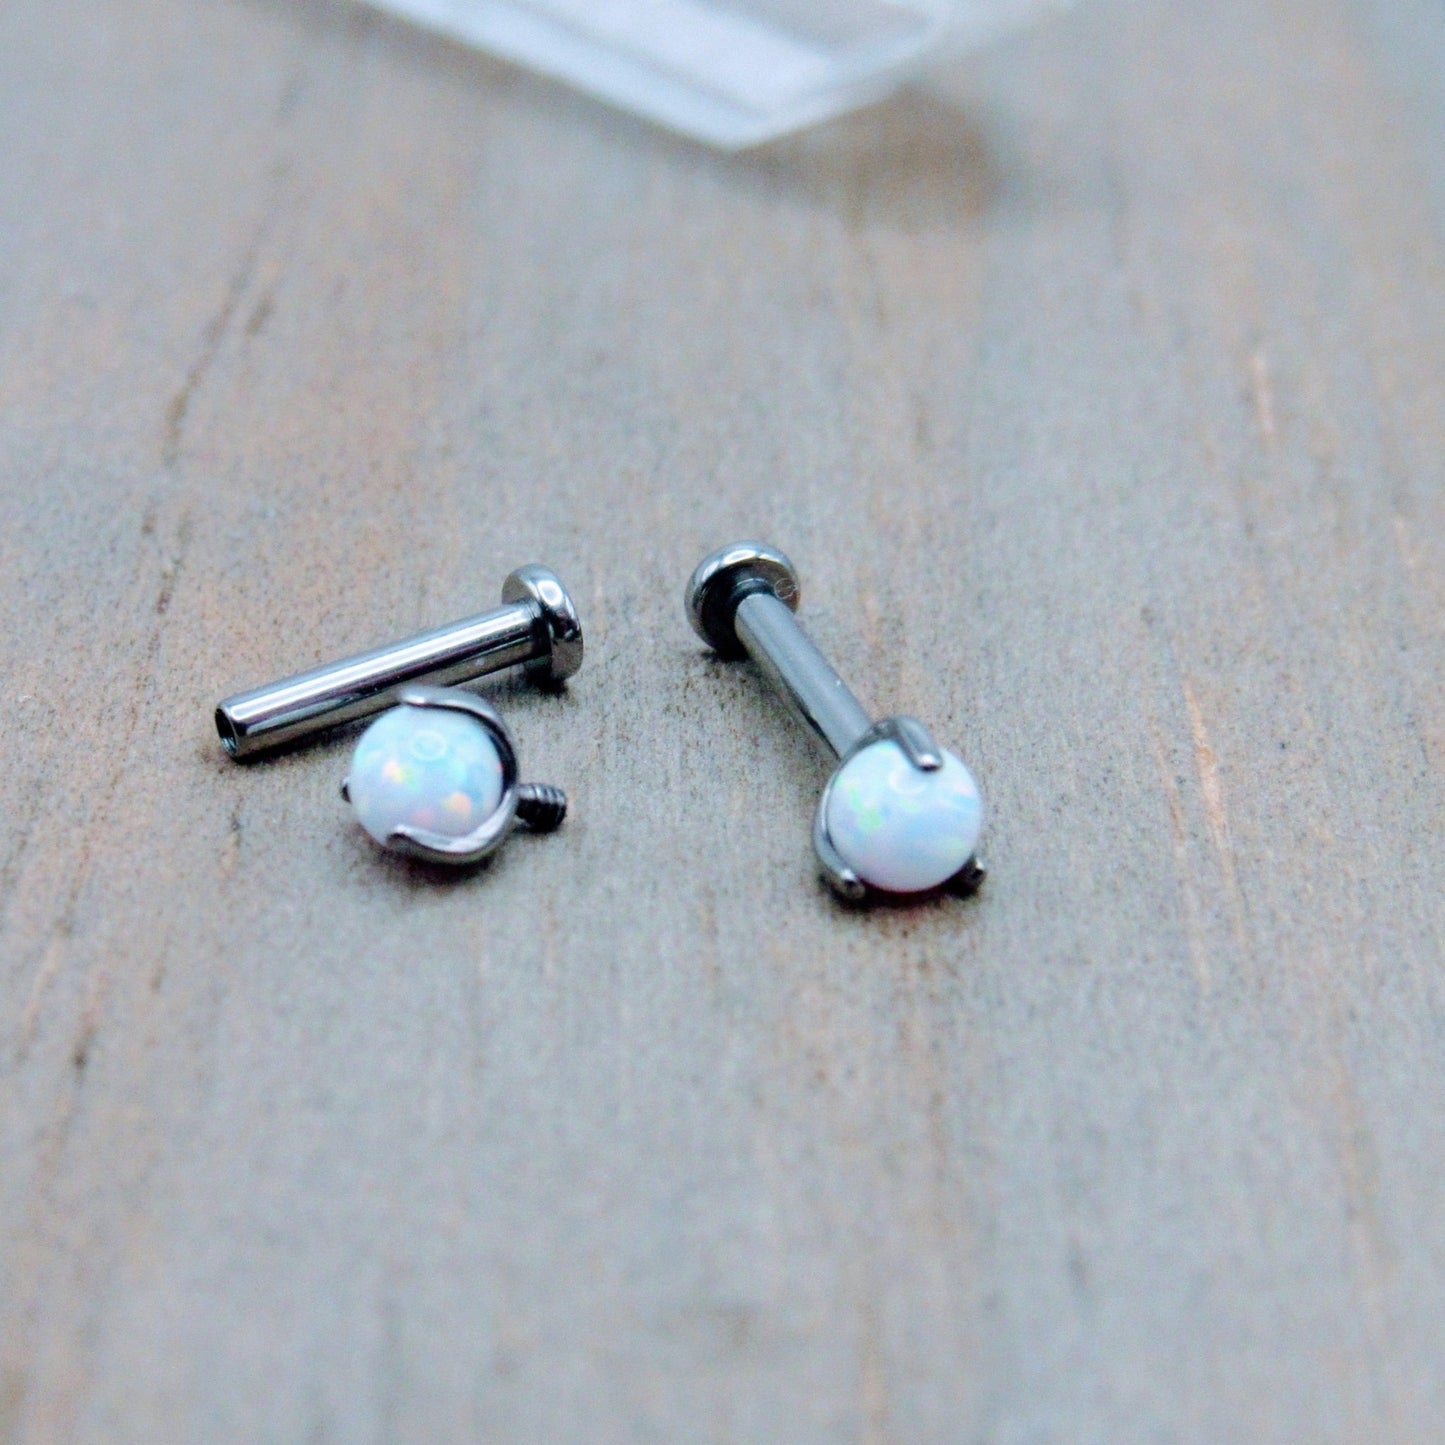 16g White opal titanium flat back earring stud set internally threaded 3mm prong set opals helix earlobe conch jewelry - Siren Body Jewelry